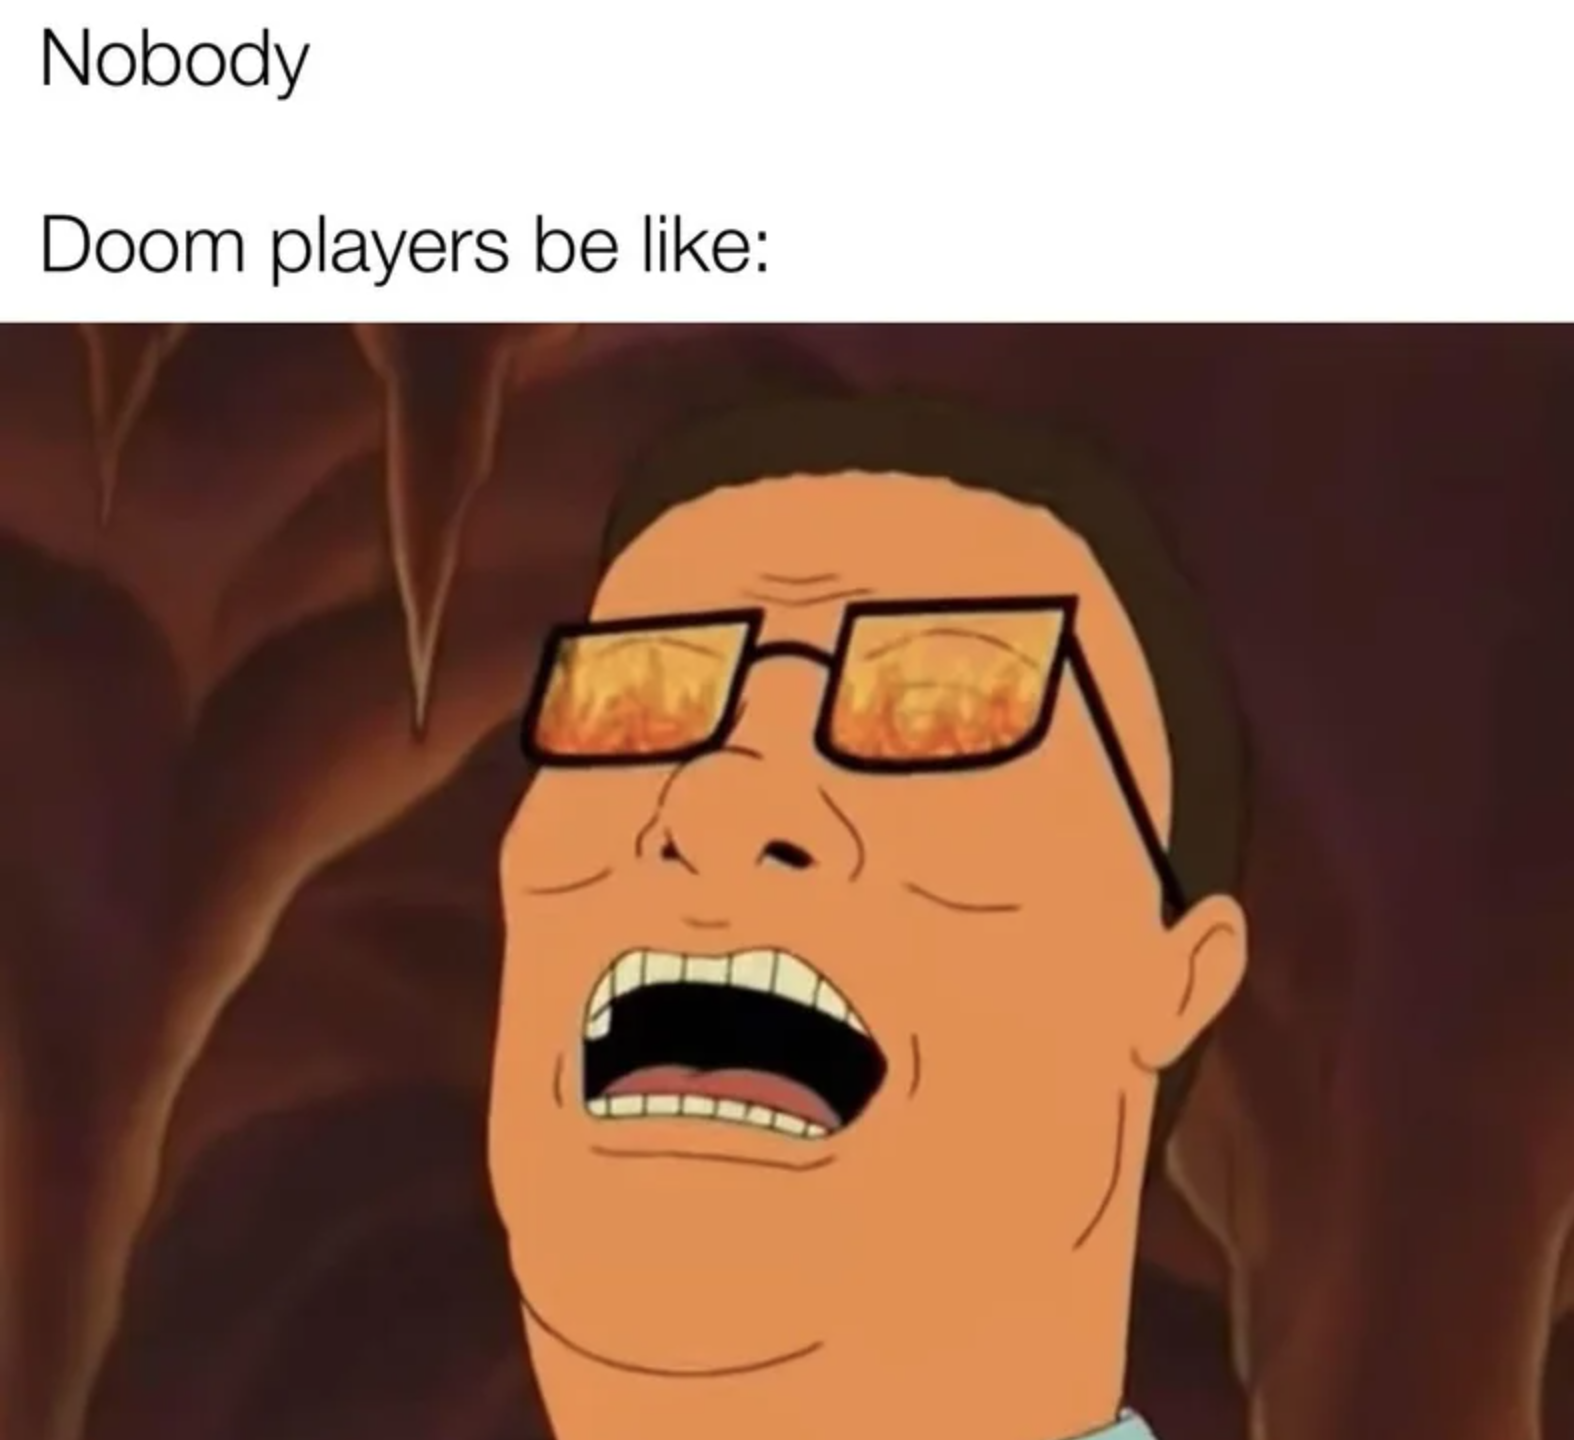 funny gaming memes - hank hill evil laugh - Nobody Doom players be